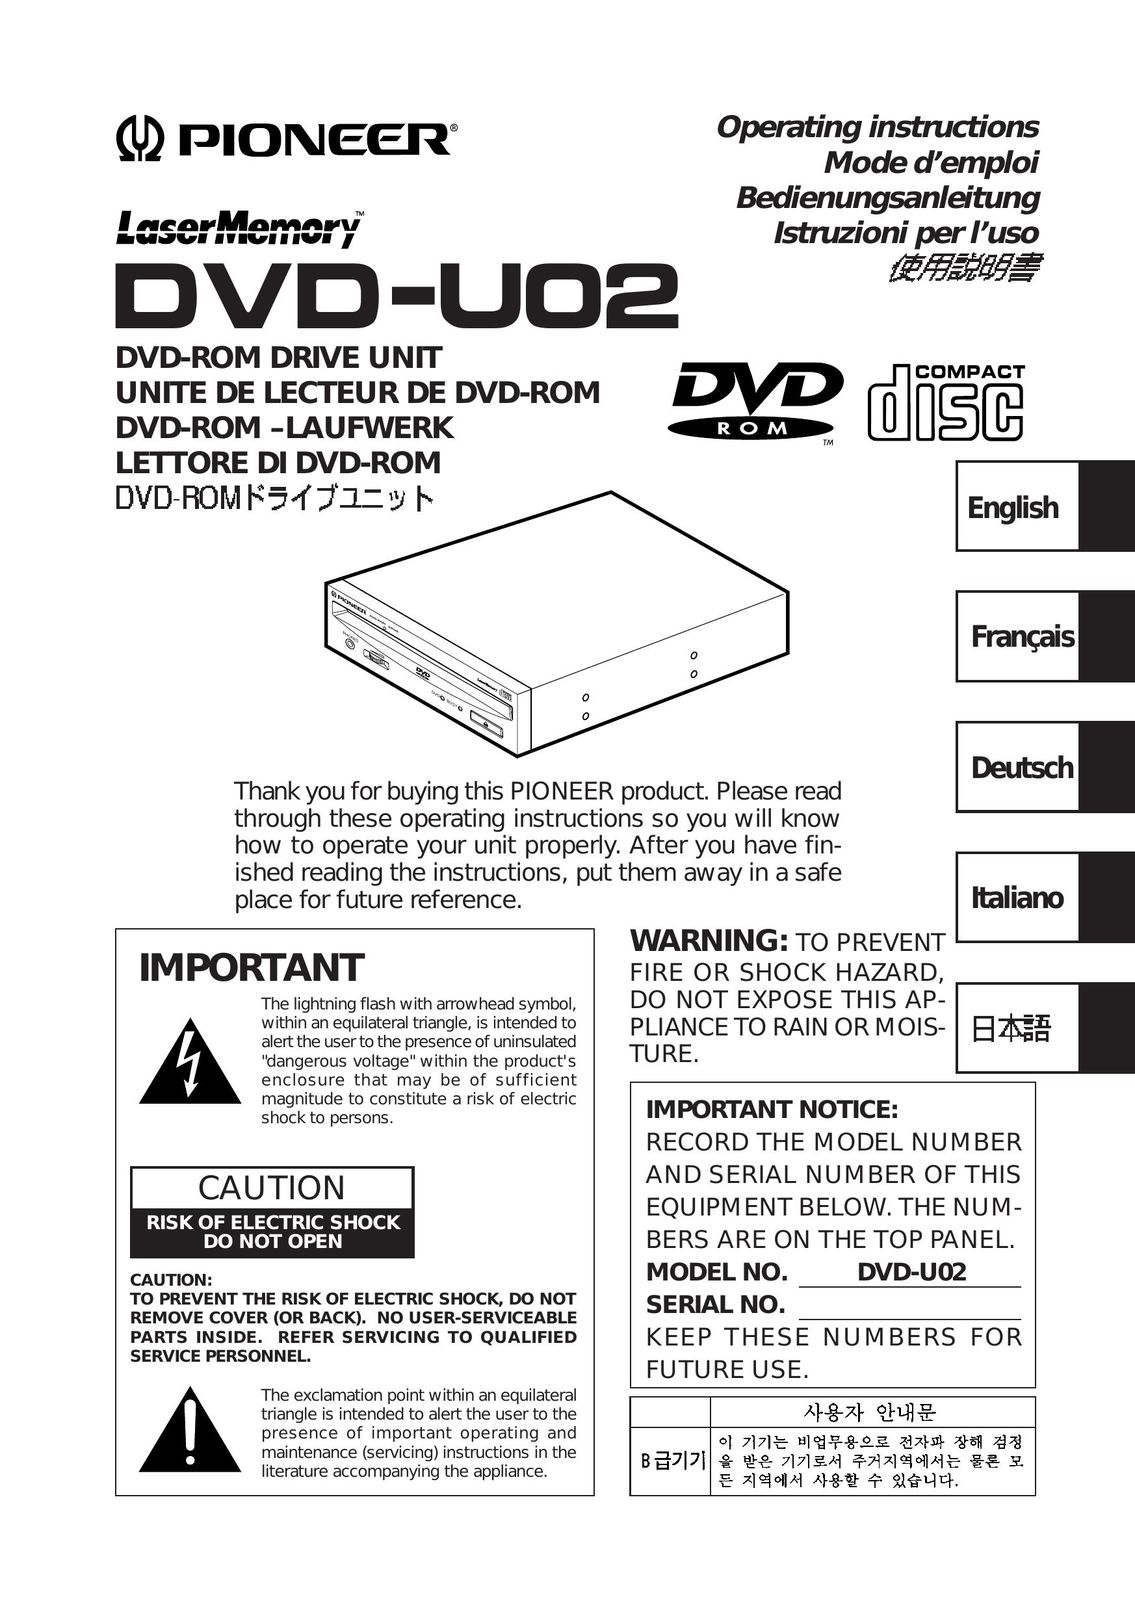 Pioneer DVD-U02 DVD Recorder User Manual